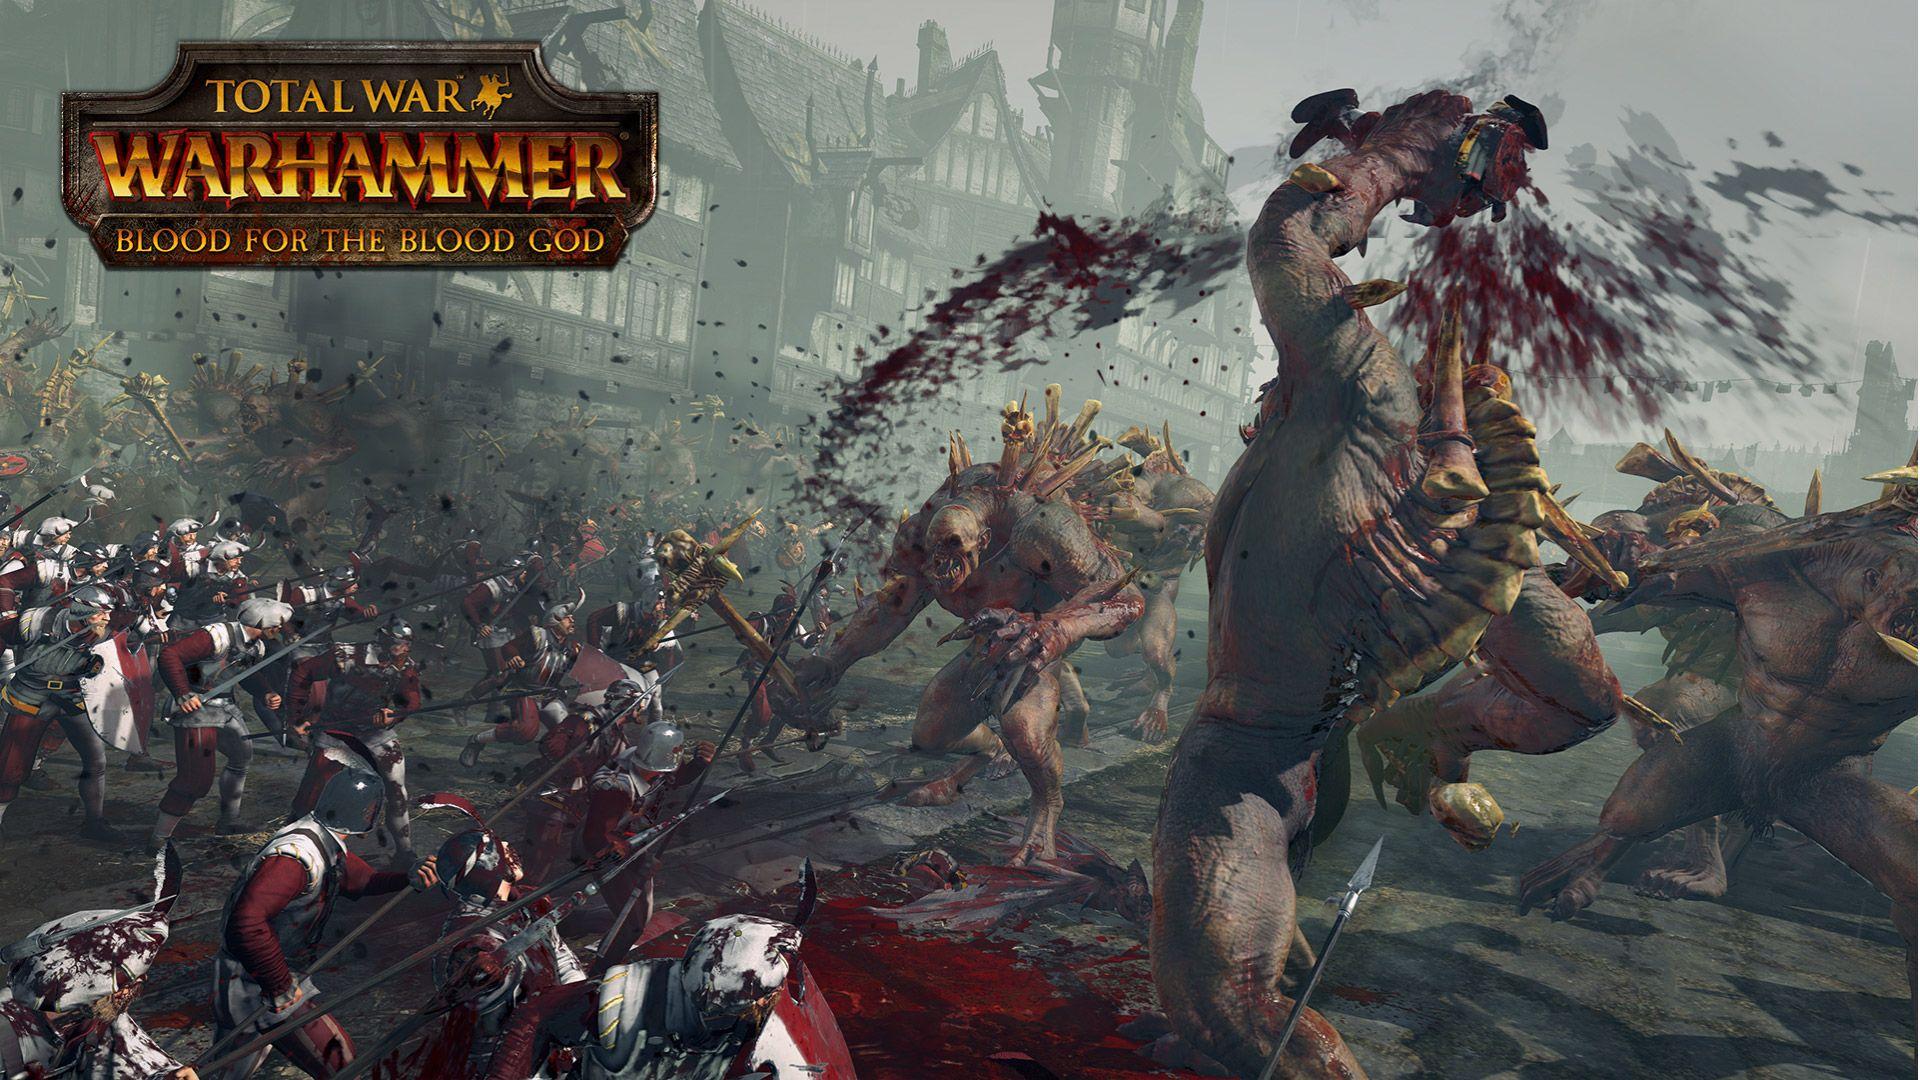 Total War Warhammer Wallpaper, Special Image